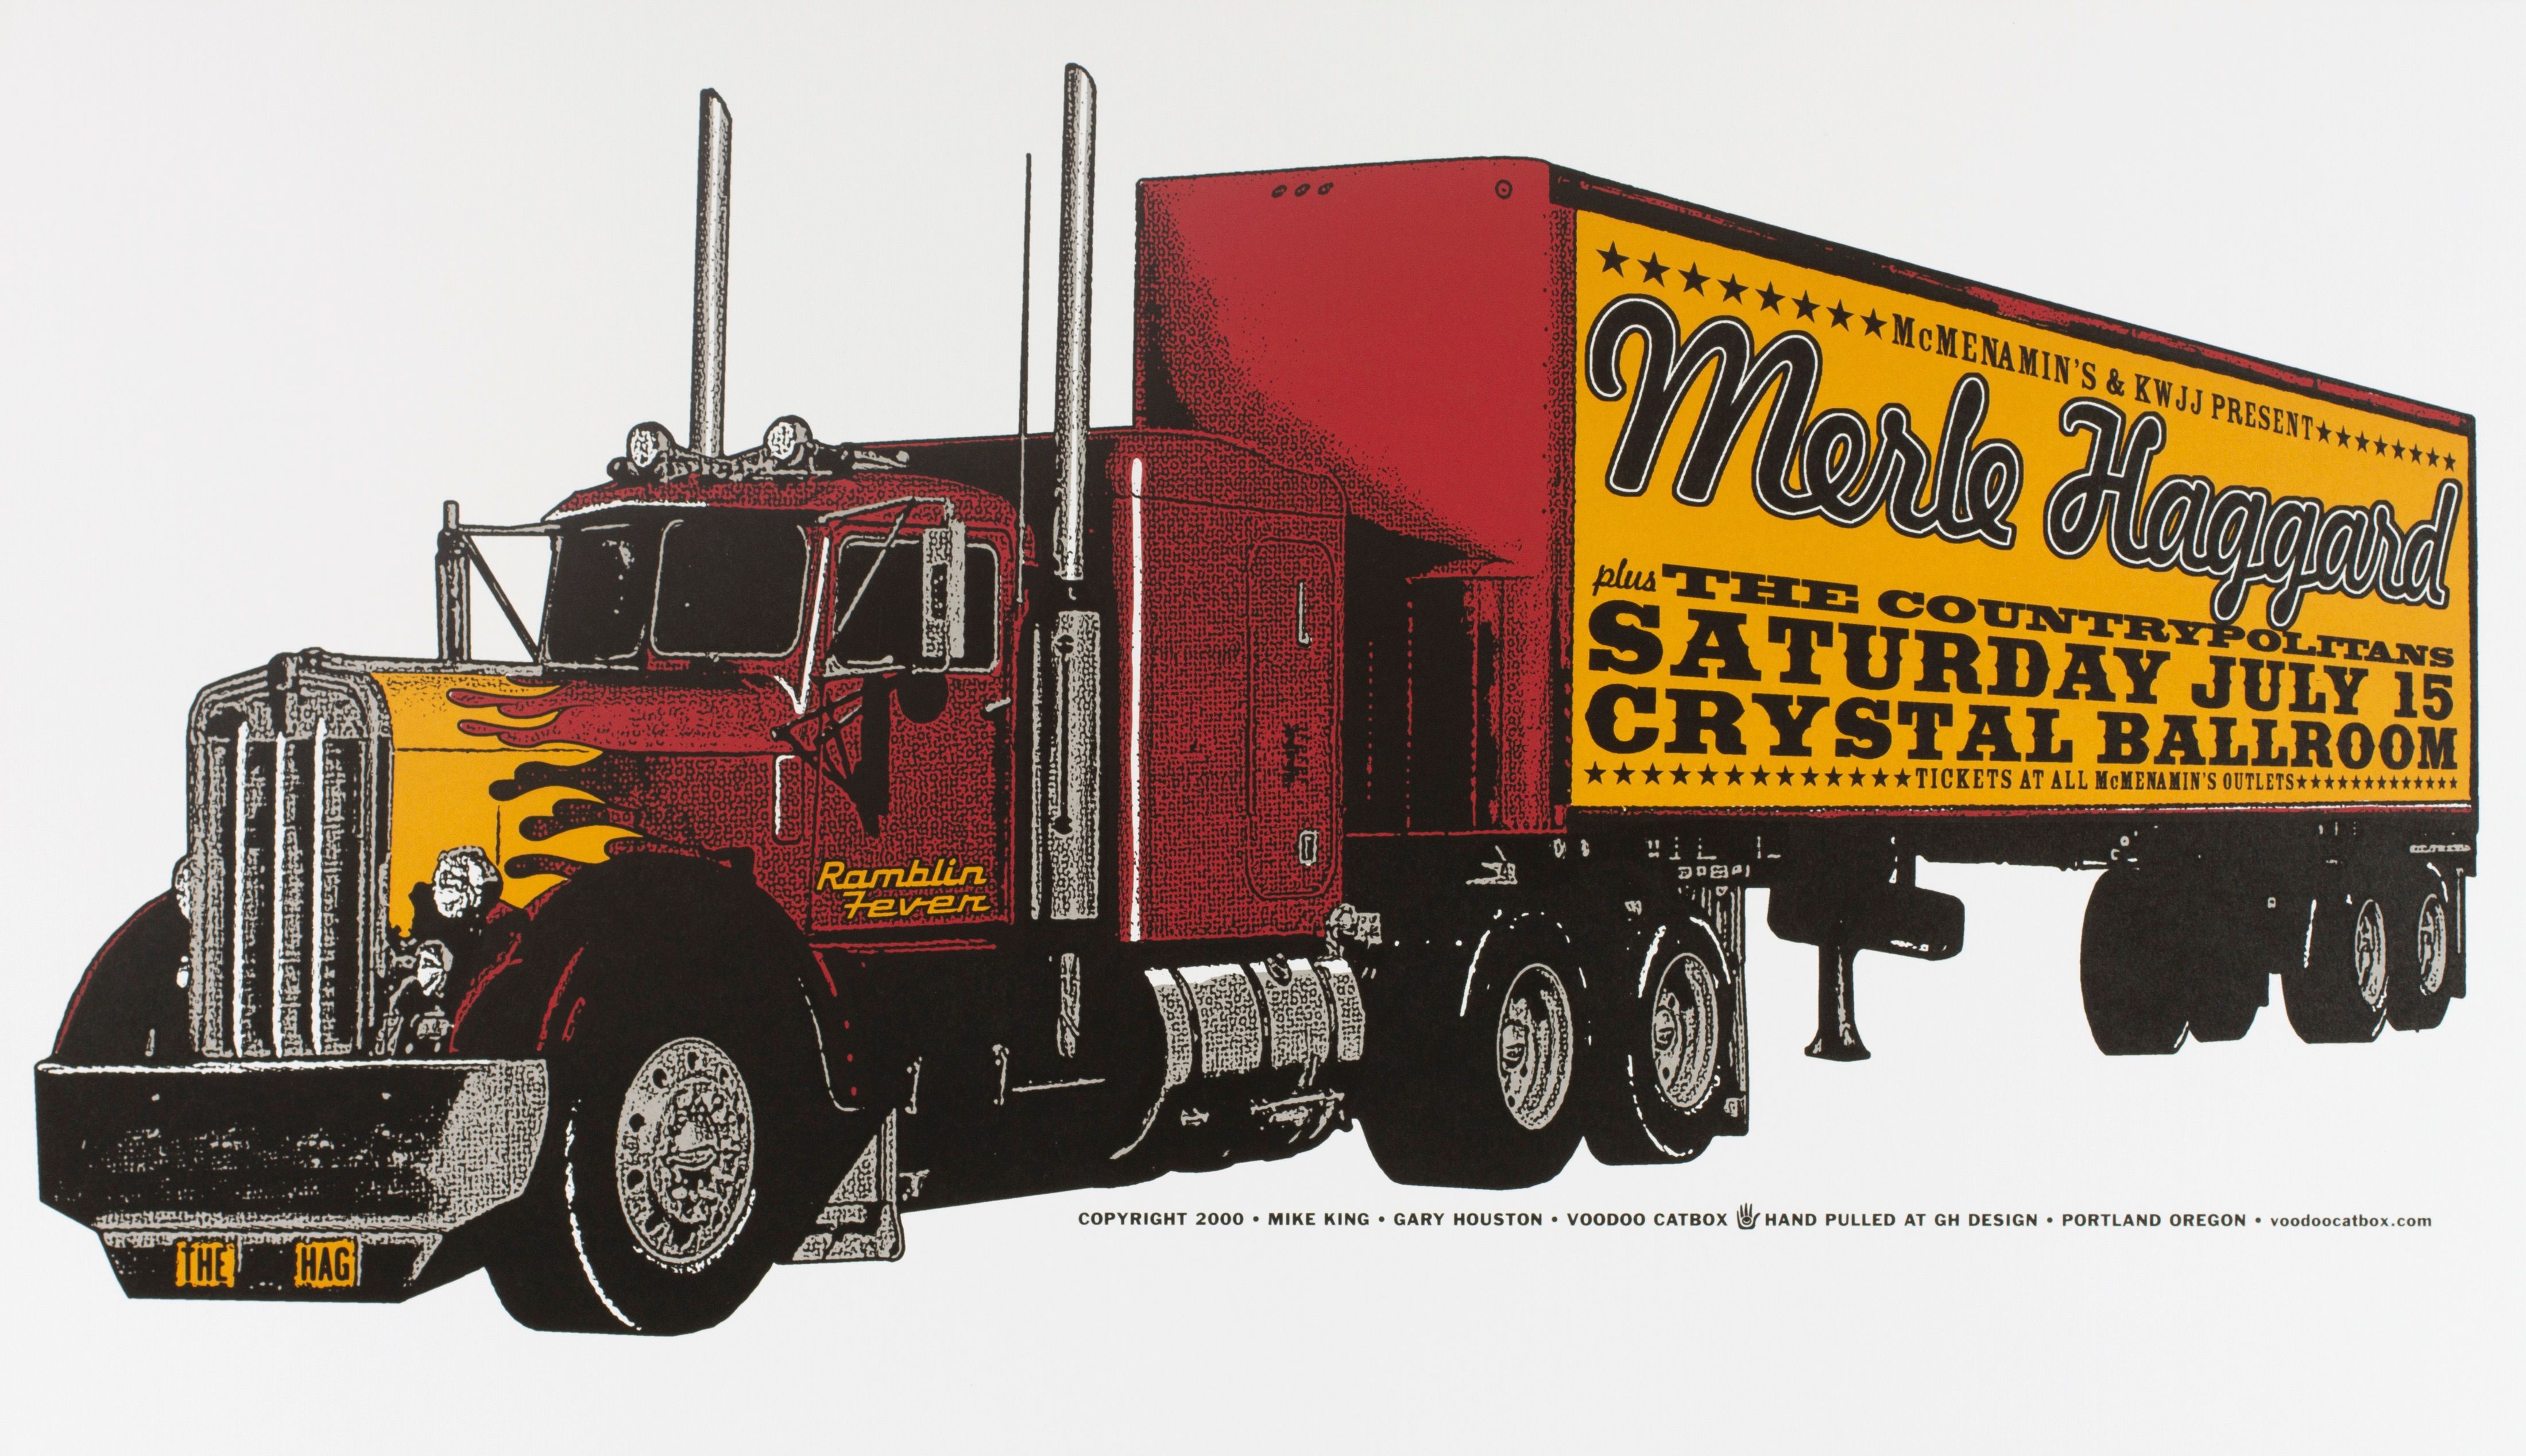 MXP-207.3 Merle Haggard Crystal Ballroom 2000 Concert Poster